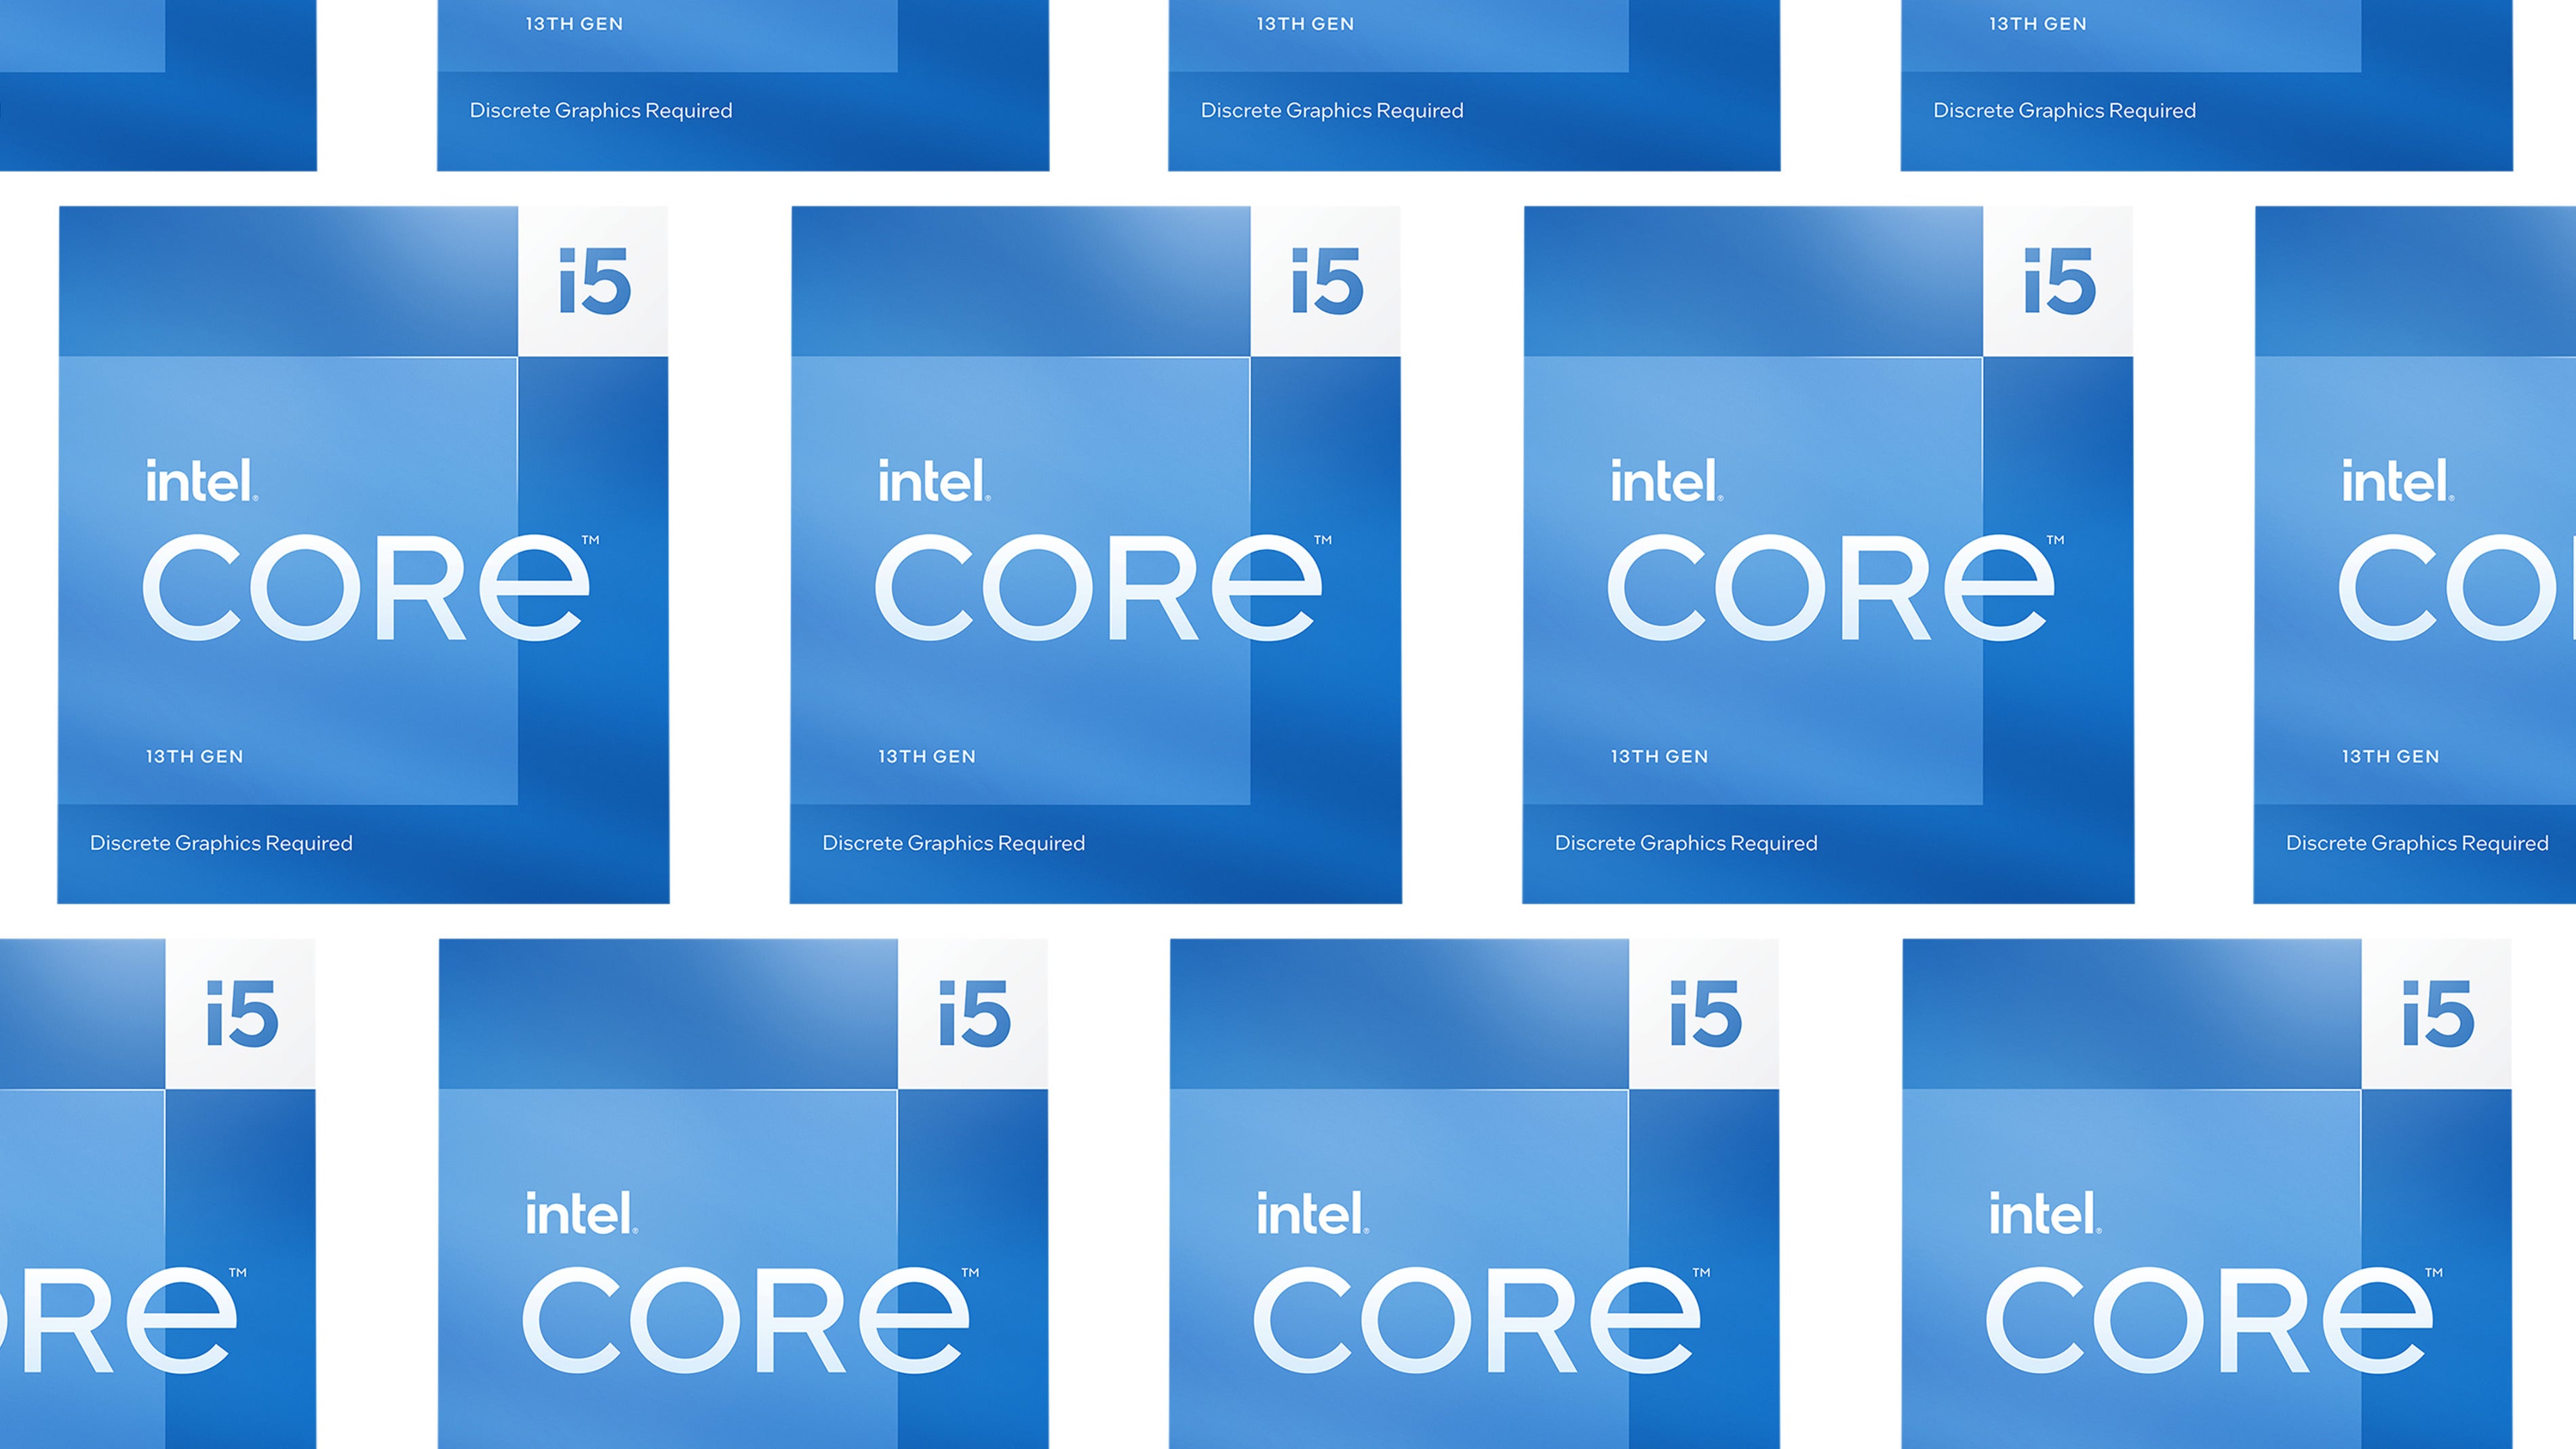 13th-gen core i5 intel processor boxes, tiled